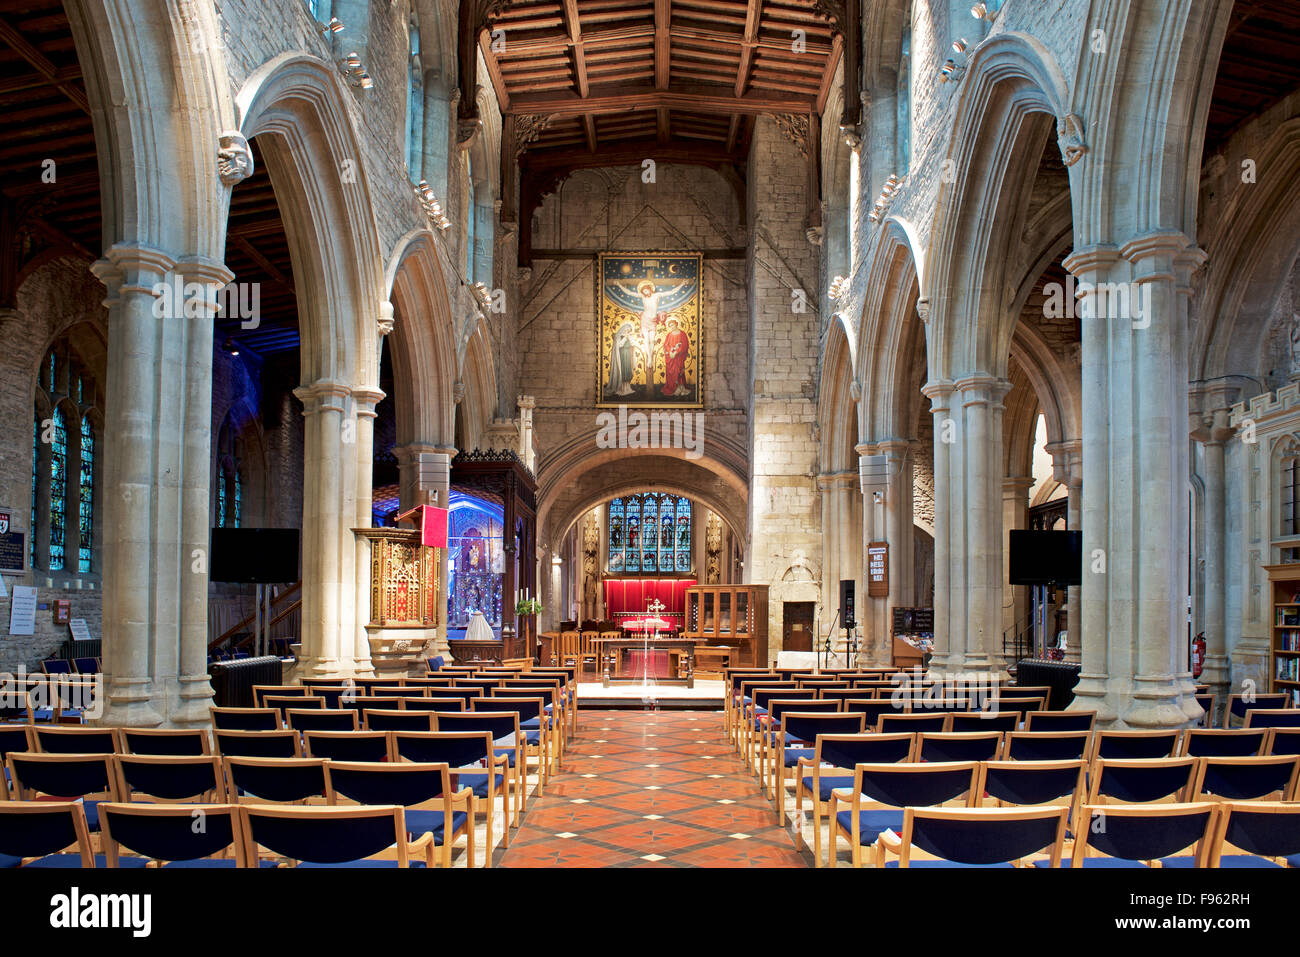 Interior of the Church of John the Baptist, Burford, Oxfordshire, England UK Stock Photo